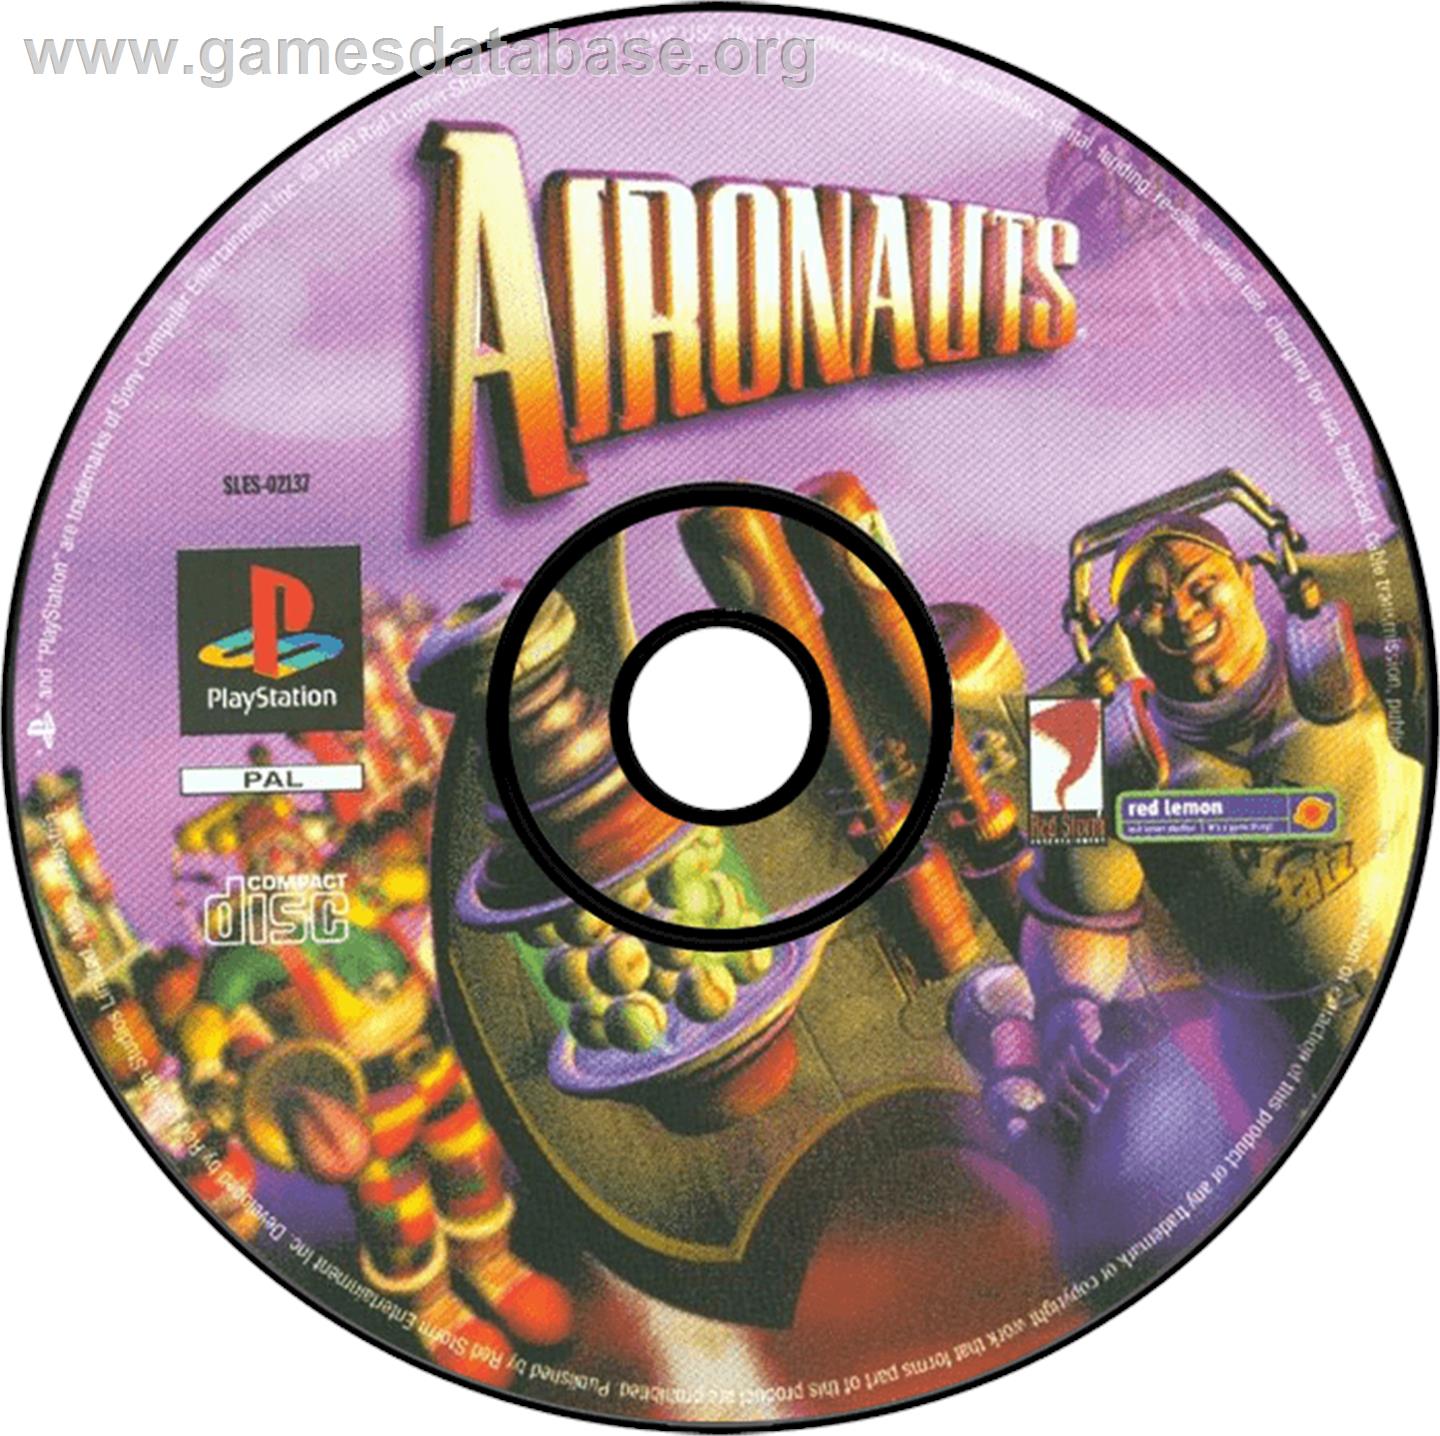 Aironauts - Sony Playstation - Artwork - Disc